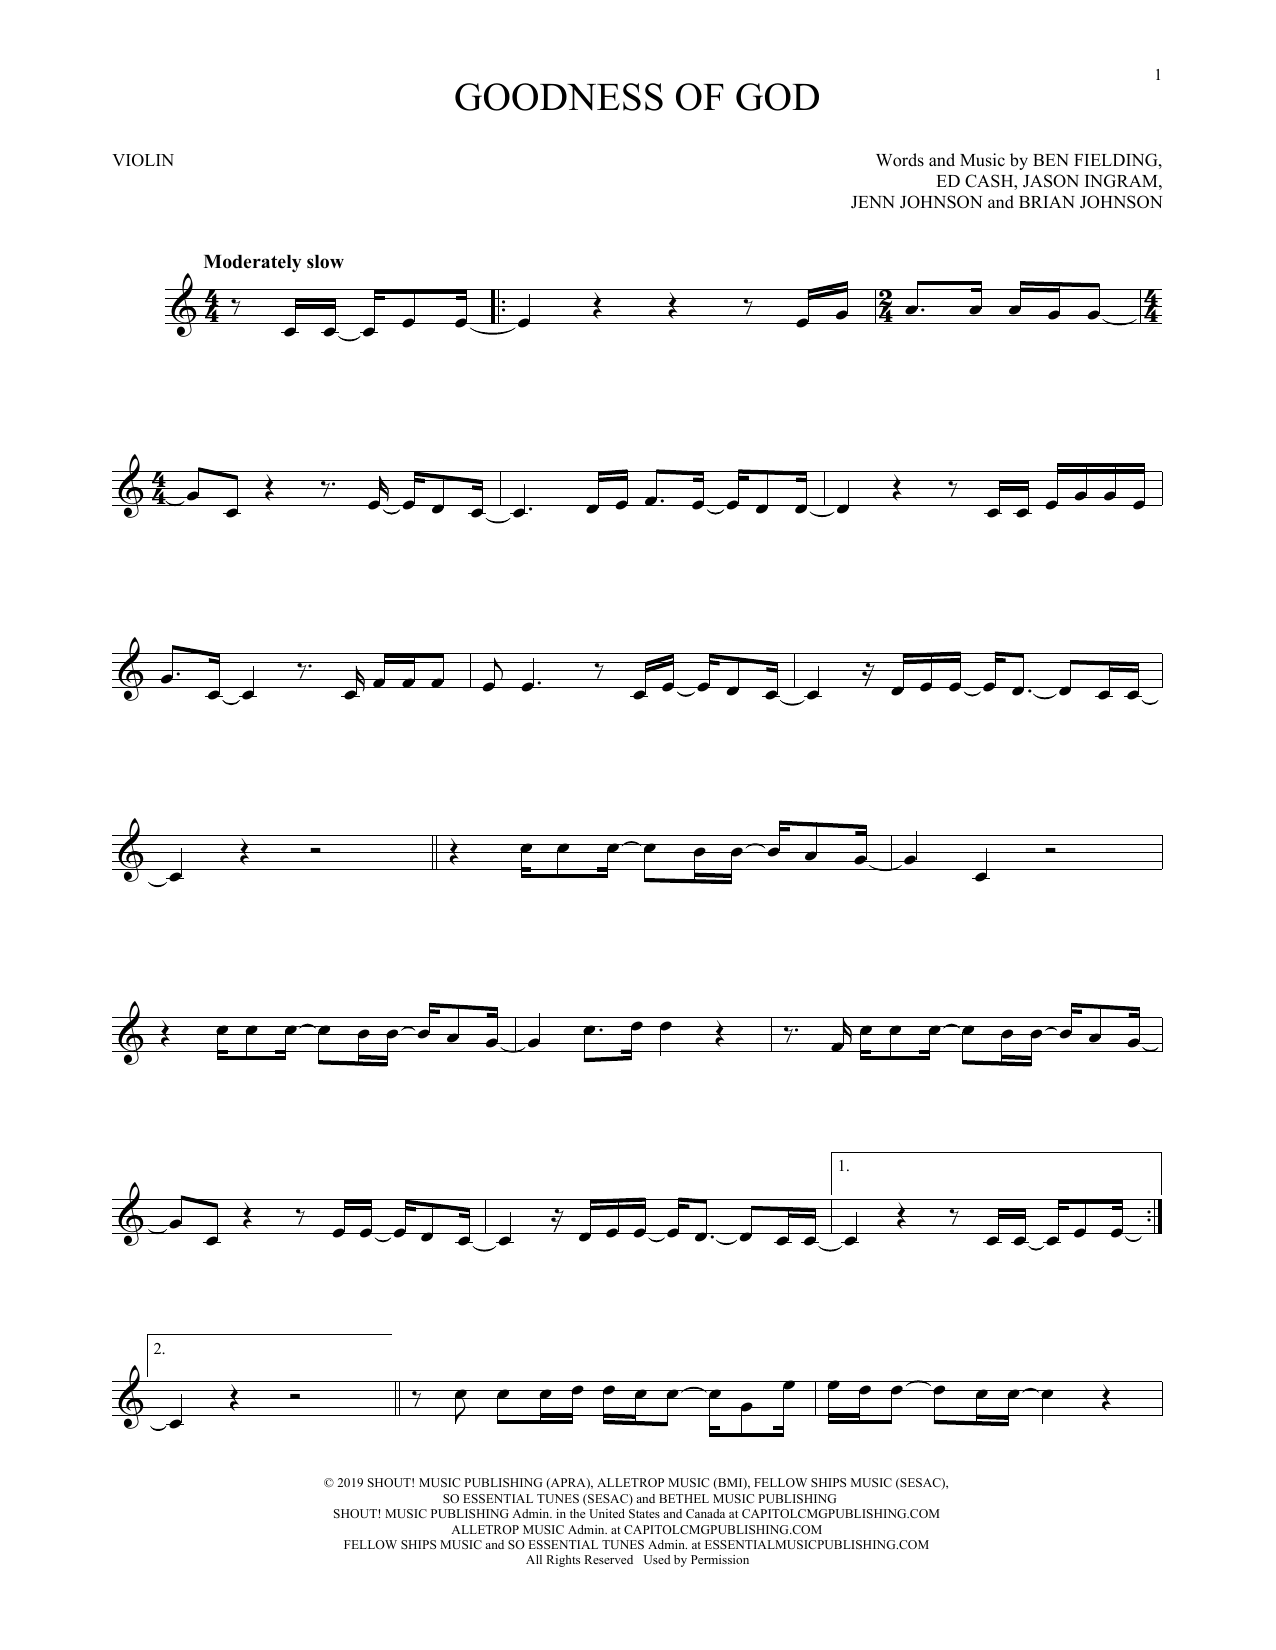 Bethel Music and Jenn Johnson Goodness Of God sheet music notes printable PDF score